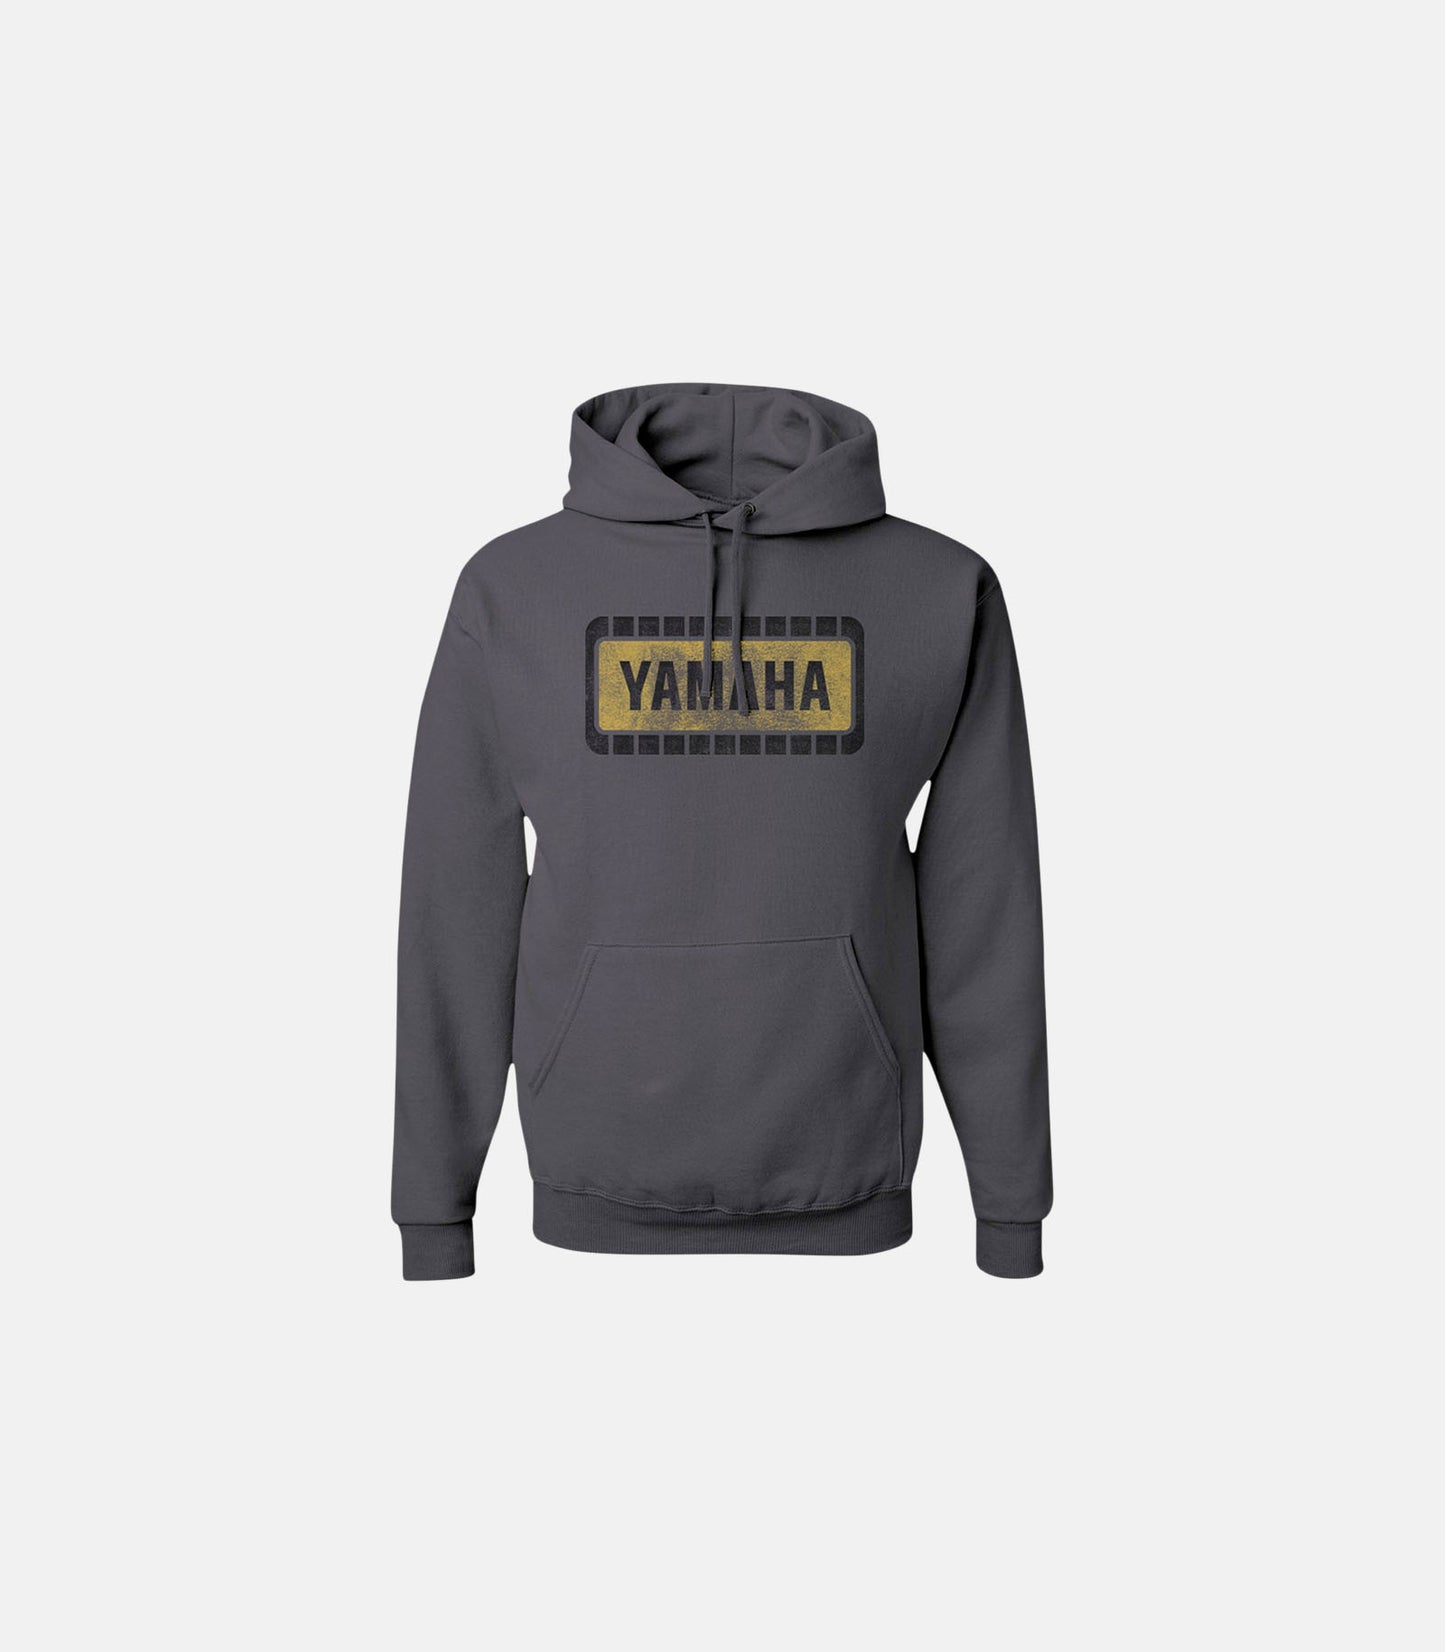 YAMAHA APPAREL Yamaha Retro Hoodie - Charcoal